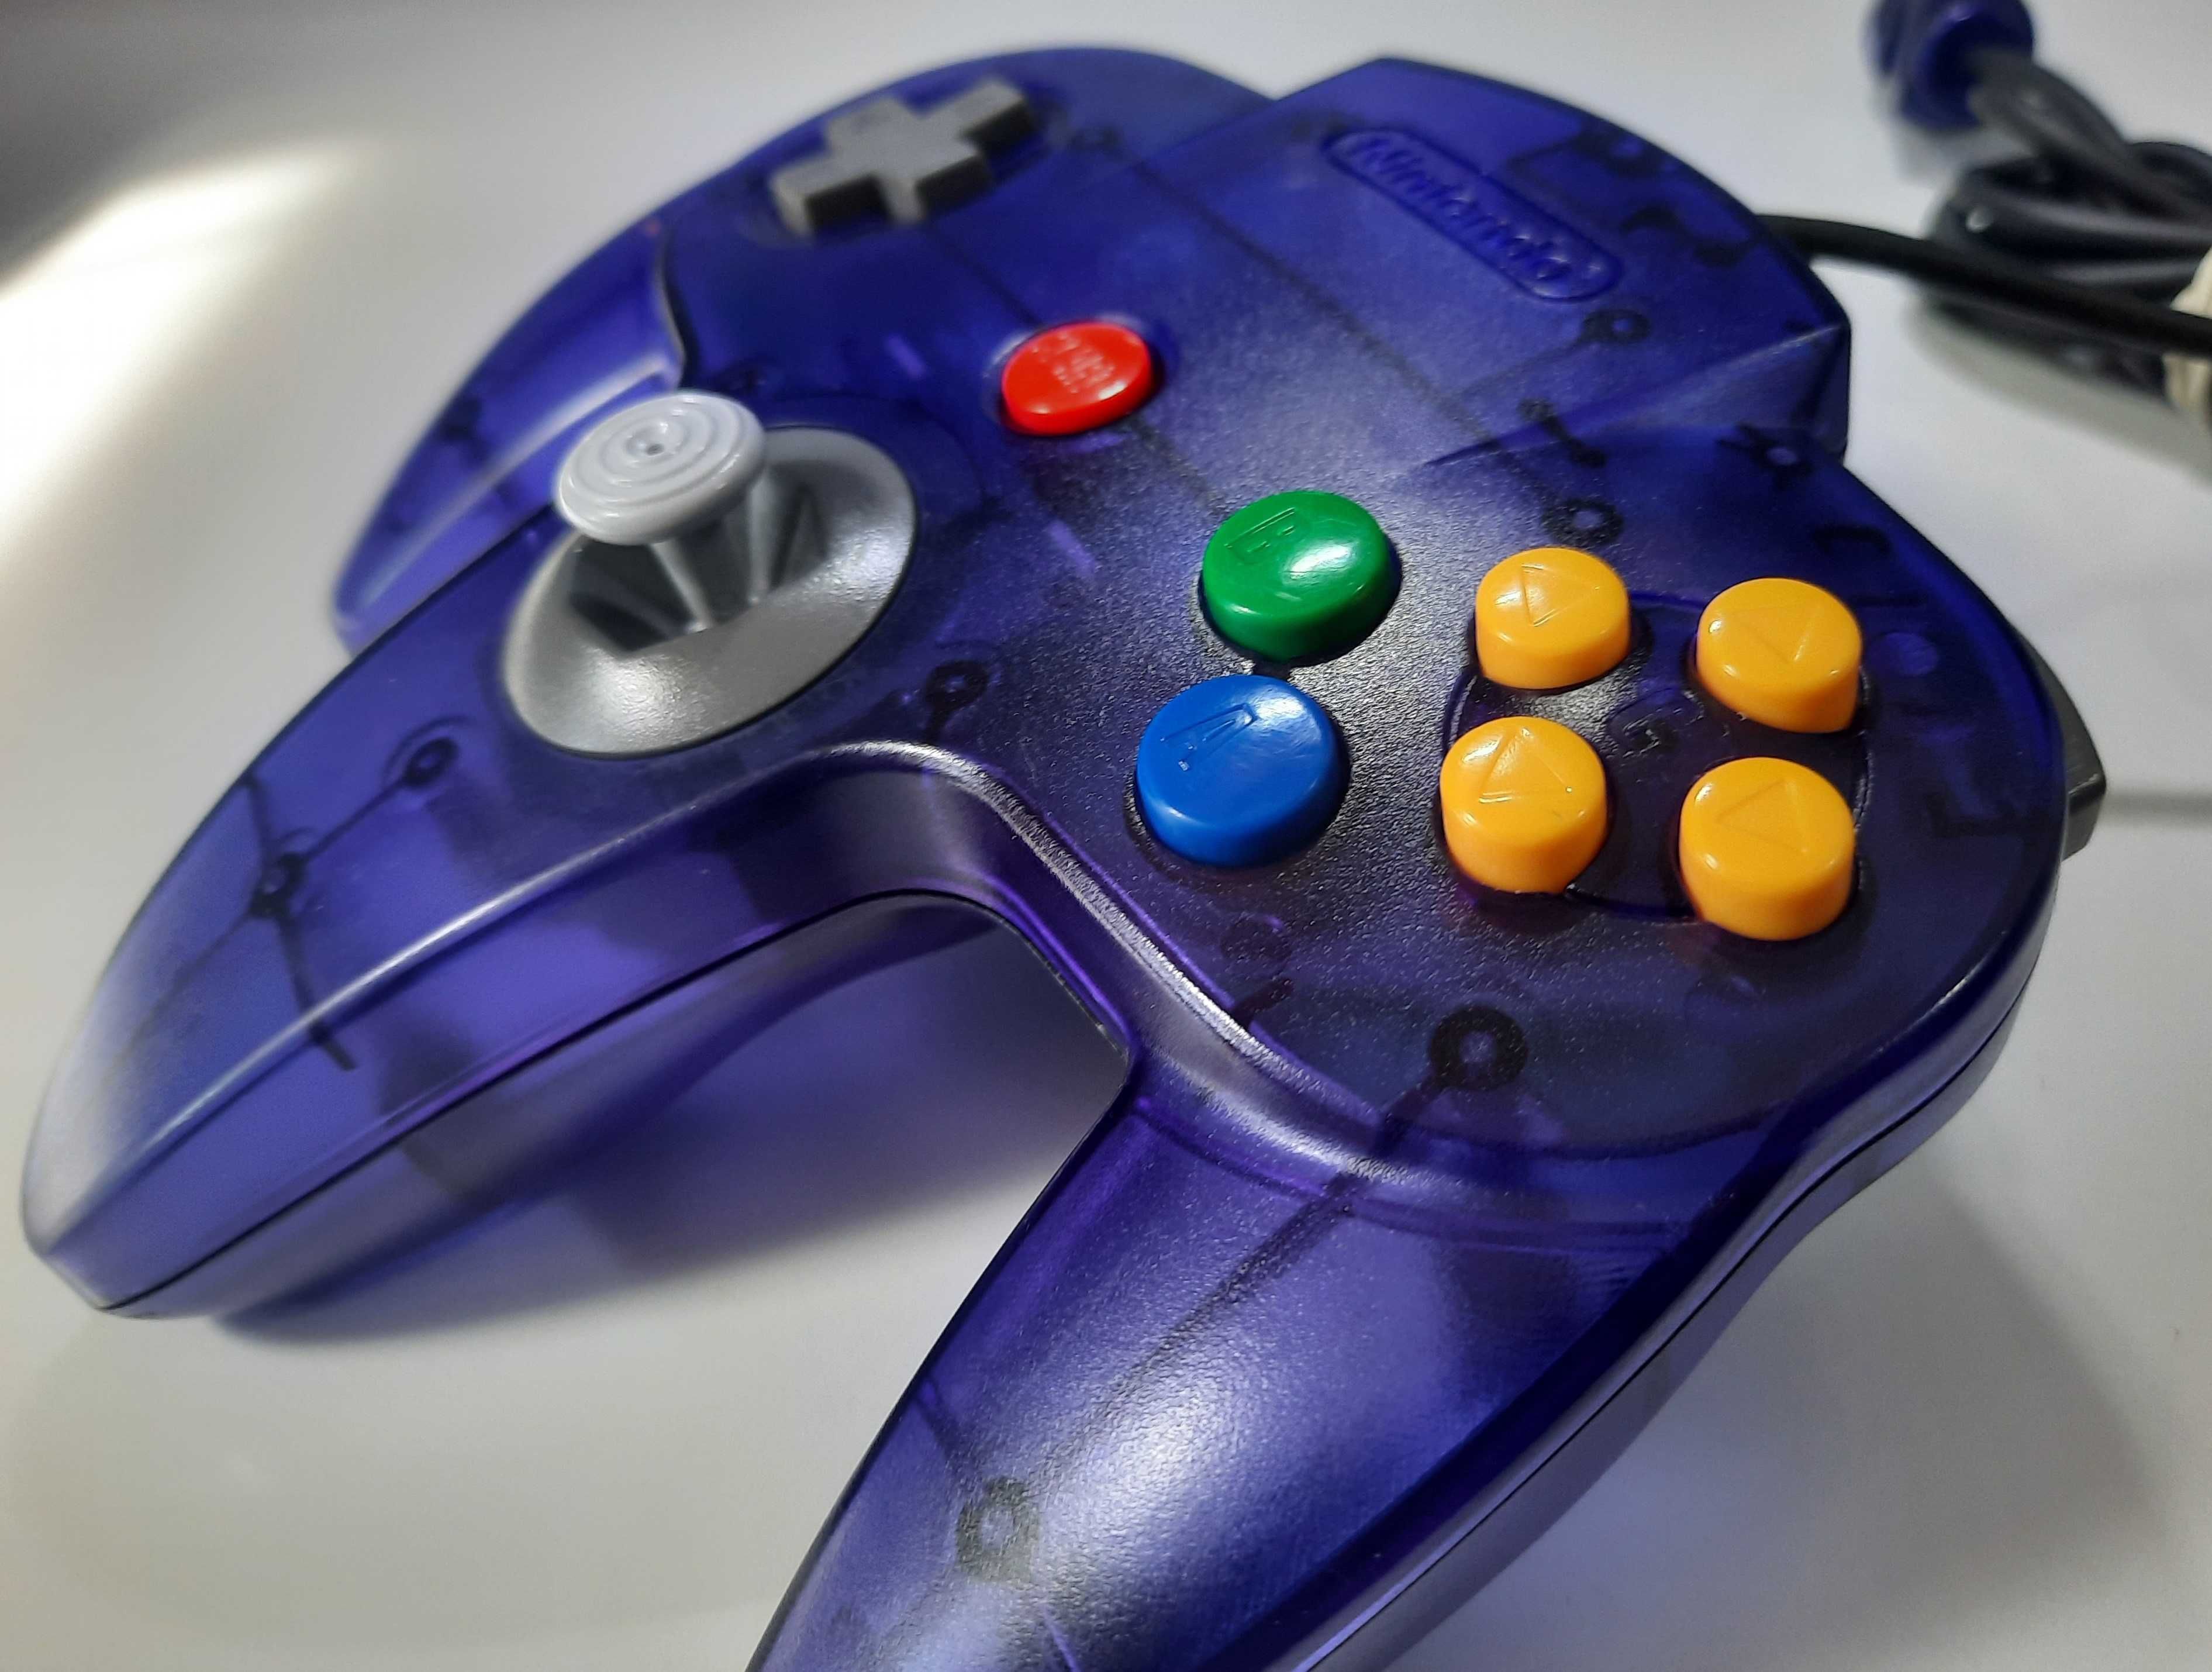 Pad Nintendo 64 / Midnight Blue (NUS-005)